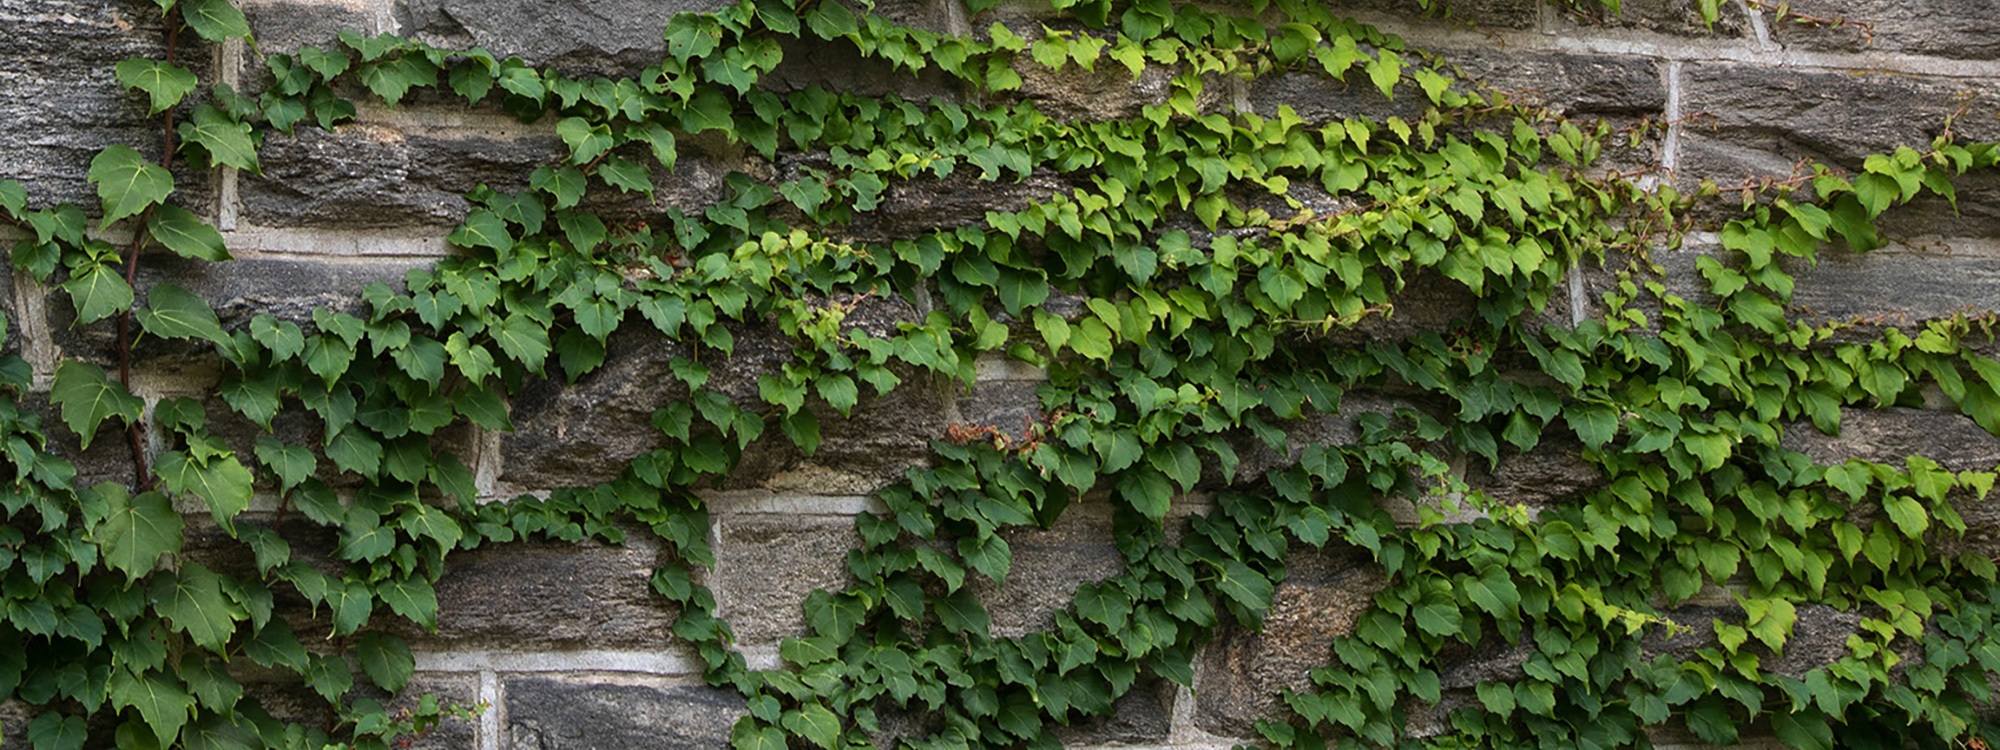 Bright green ivy vines creeping up a grey stone wall.